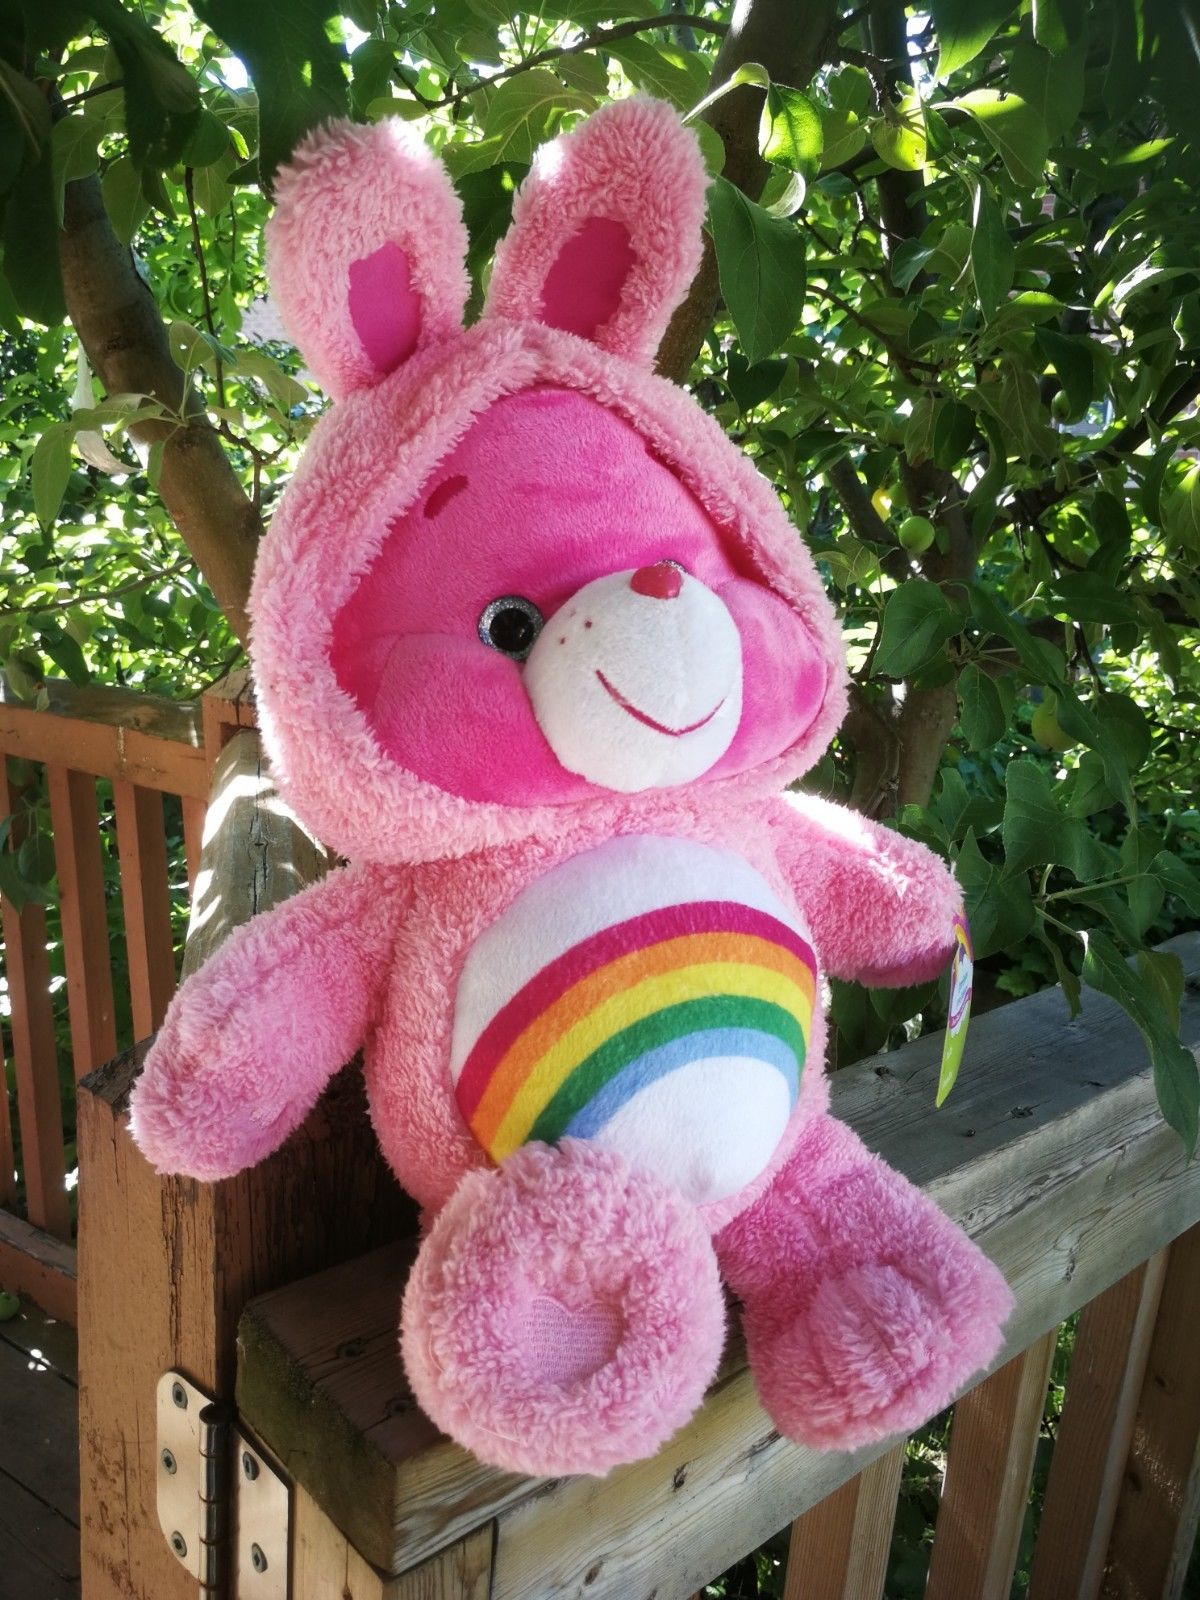 Rainbow Care Bears Plush Toy Pink Les - Calinours  Cherr Bear Gailourson New 